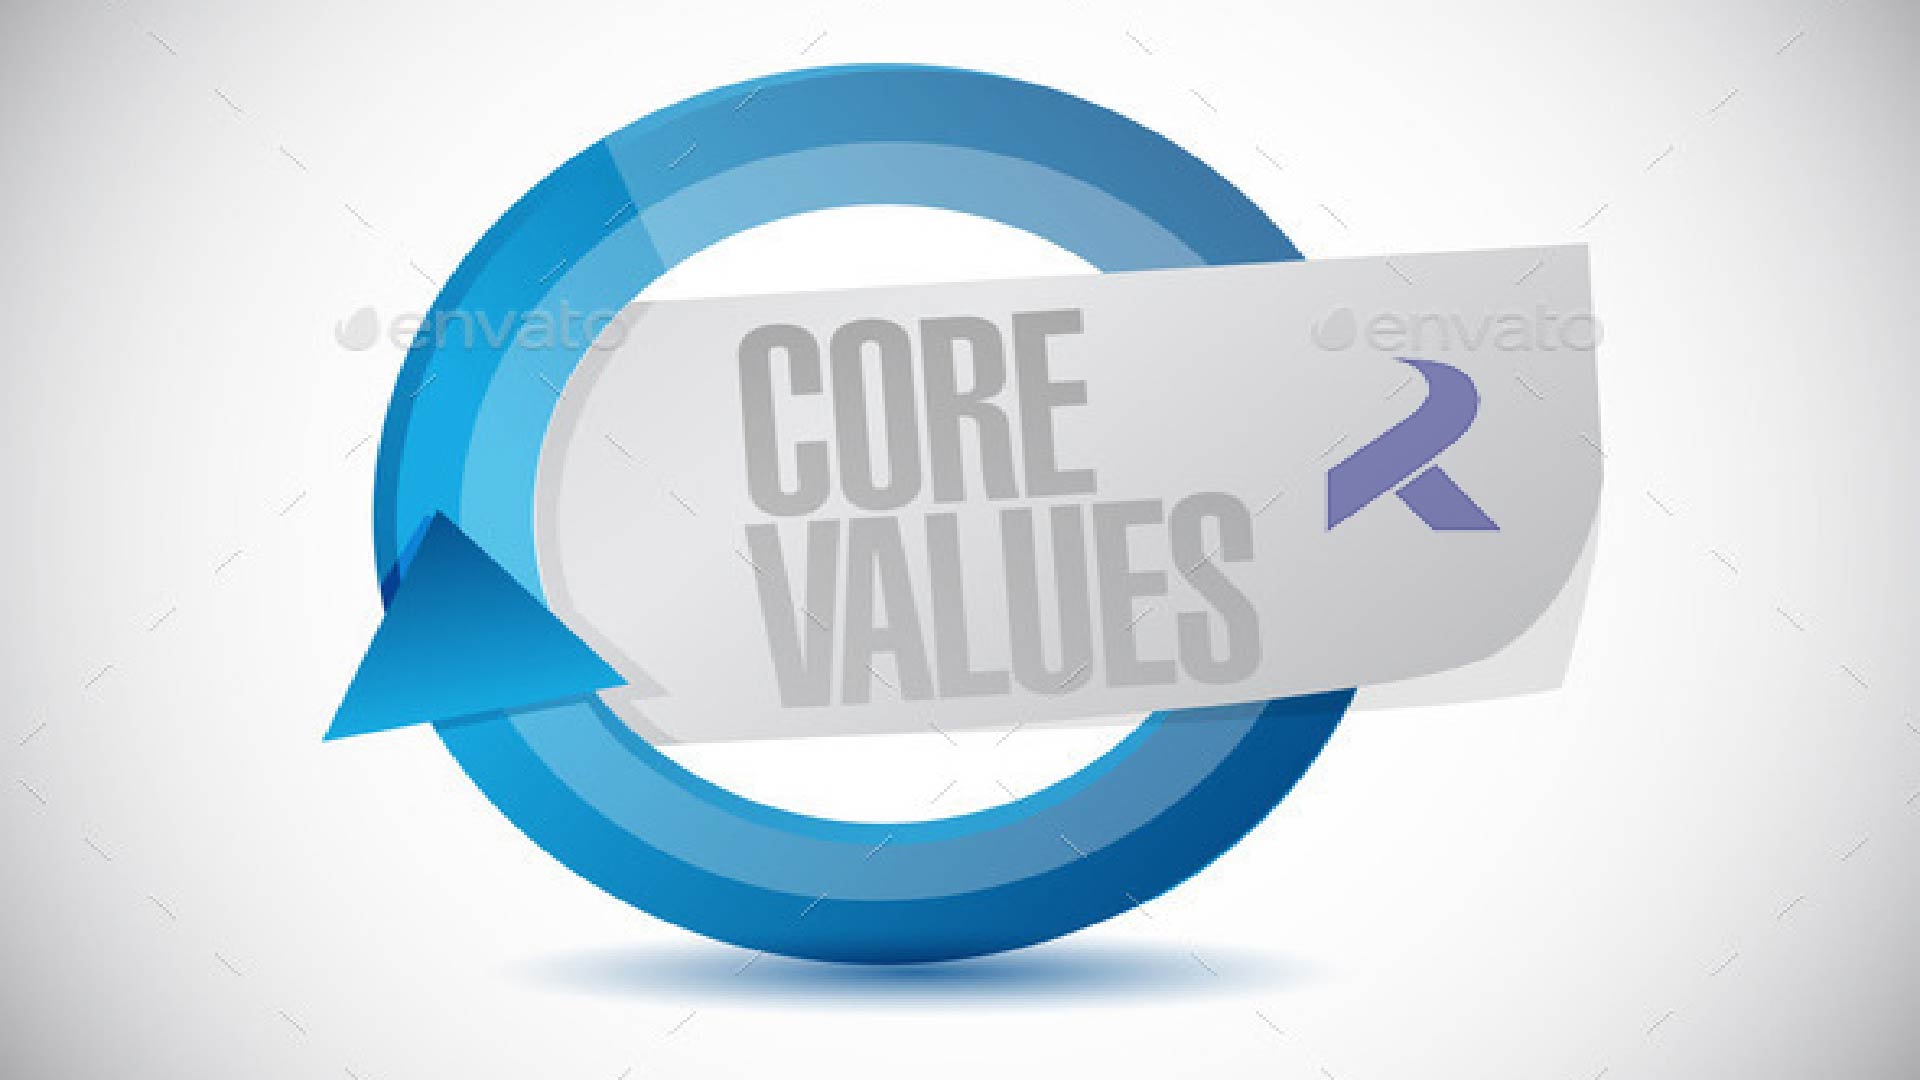 We live our Core Values